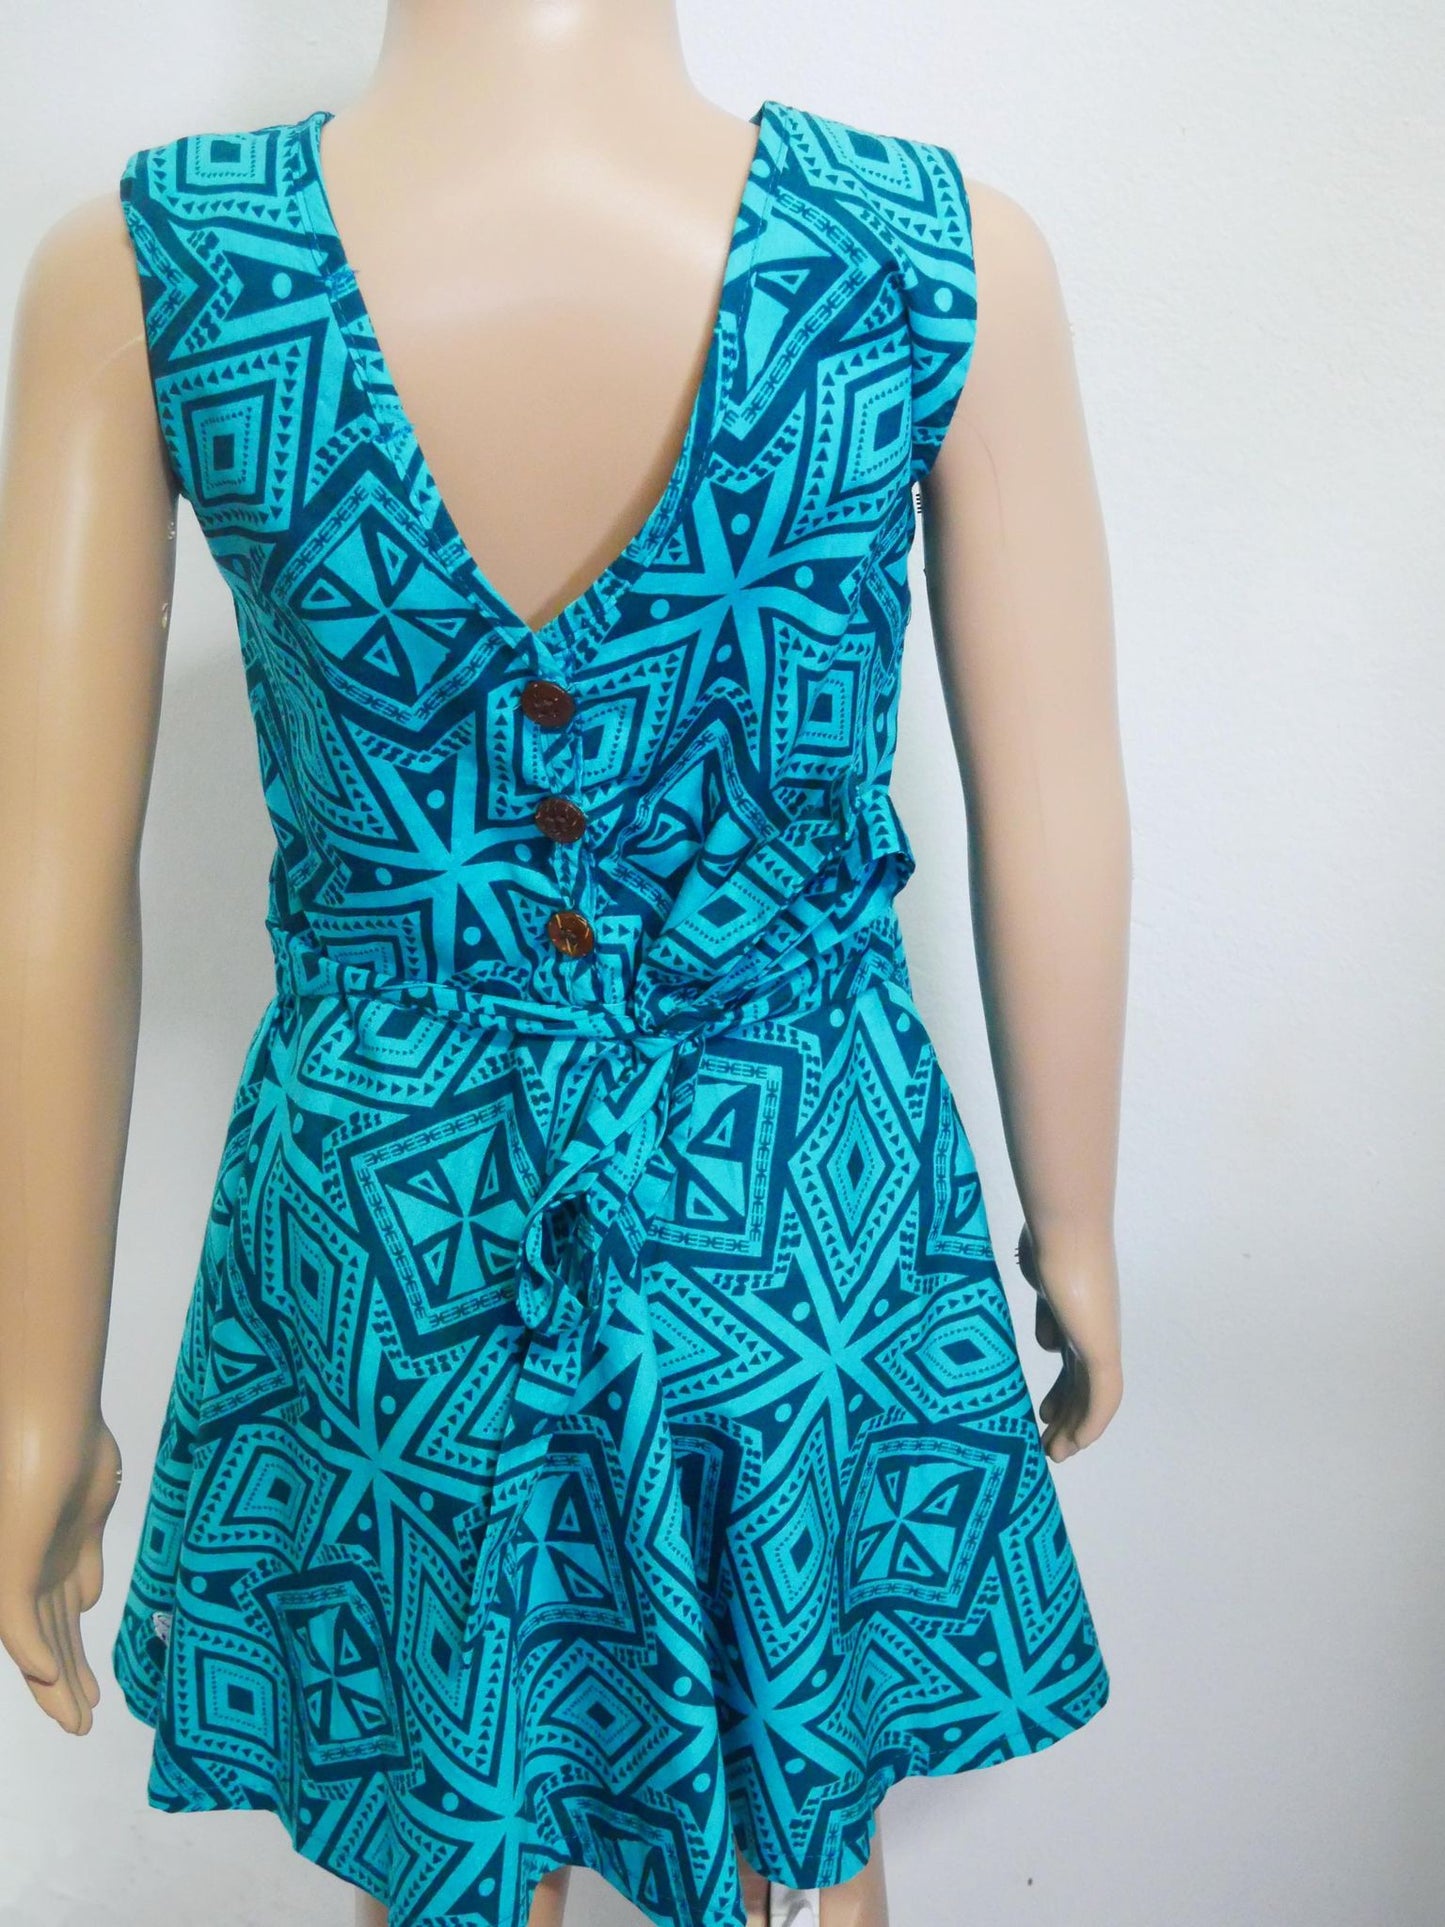 Tanoa Samoa Girl's Blue Dress (Jade Blue)